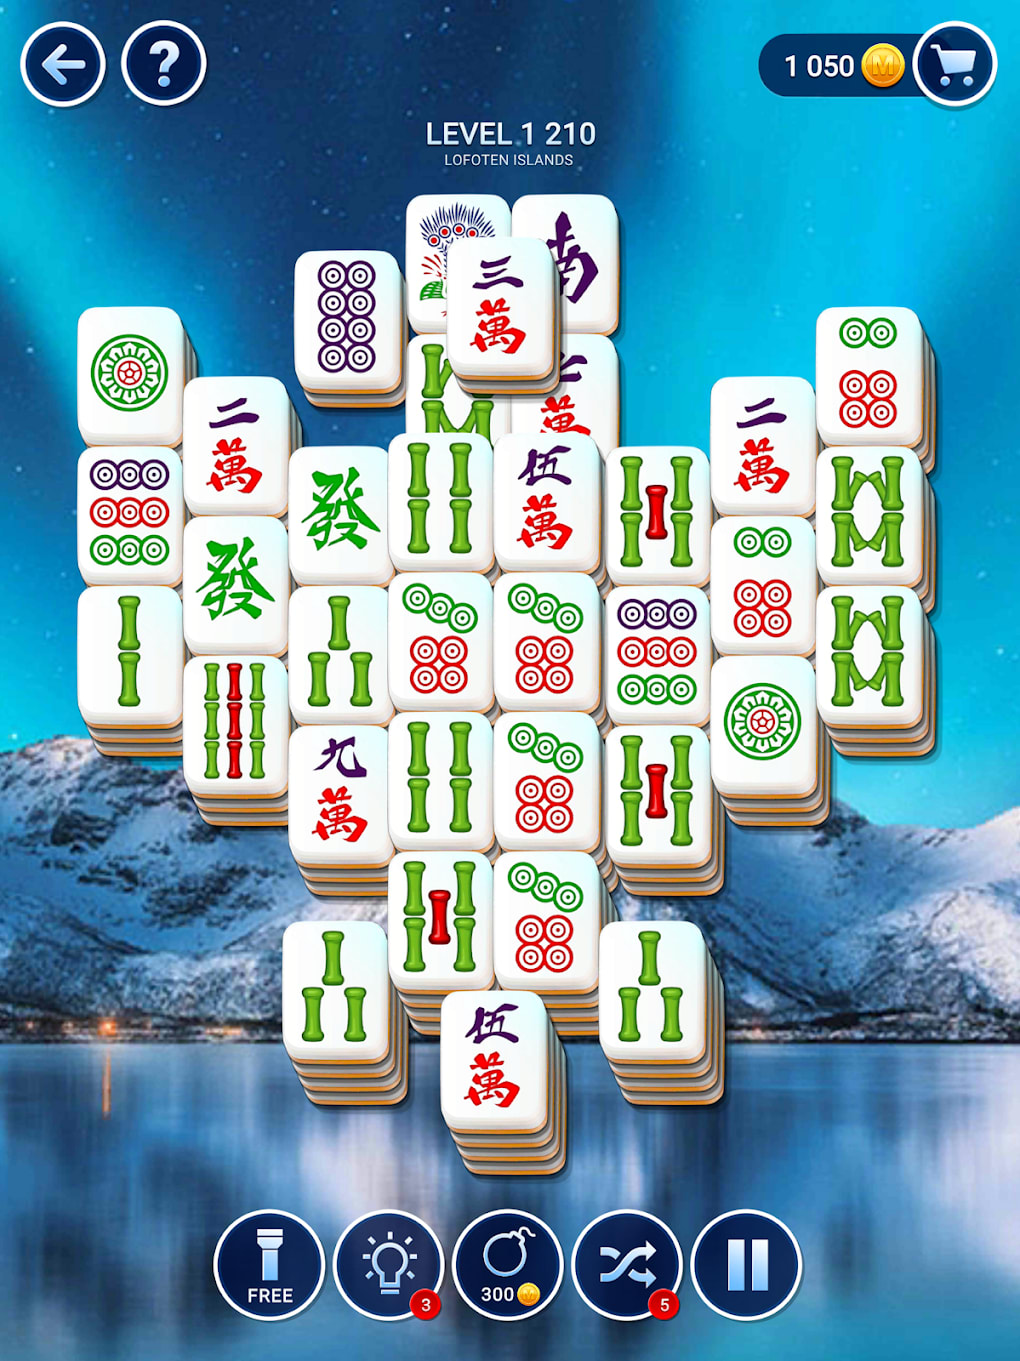 Baixar Mahjong Club 2.6 Android - Download APK Grátis